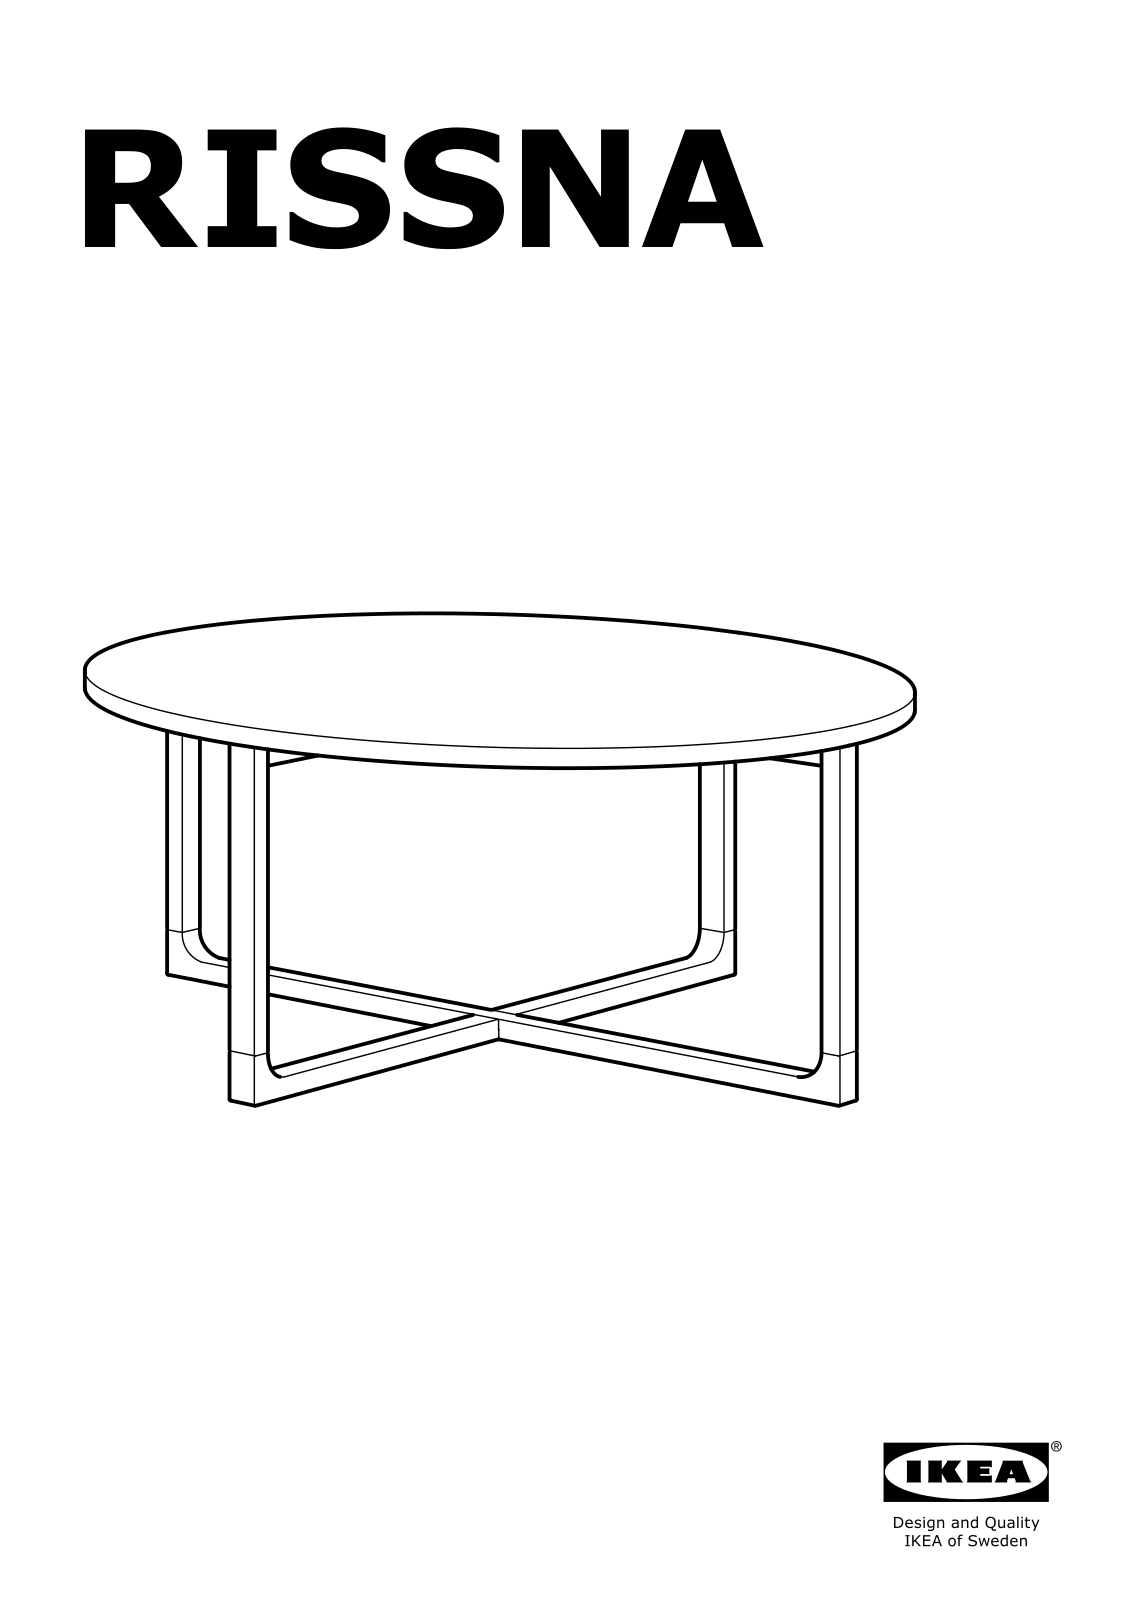 IKEA RISSNA User Manual